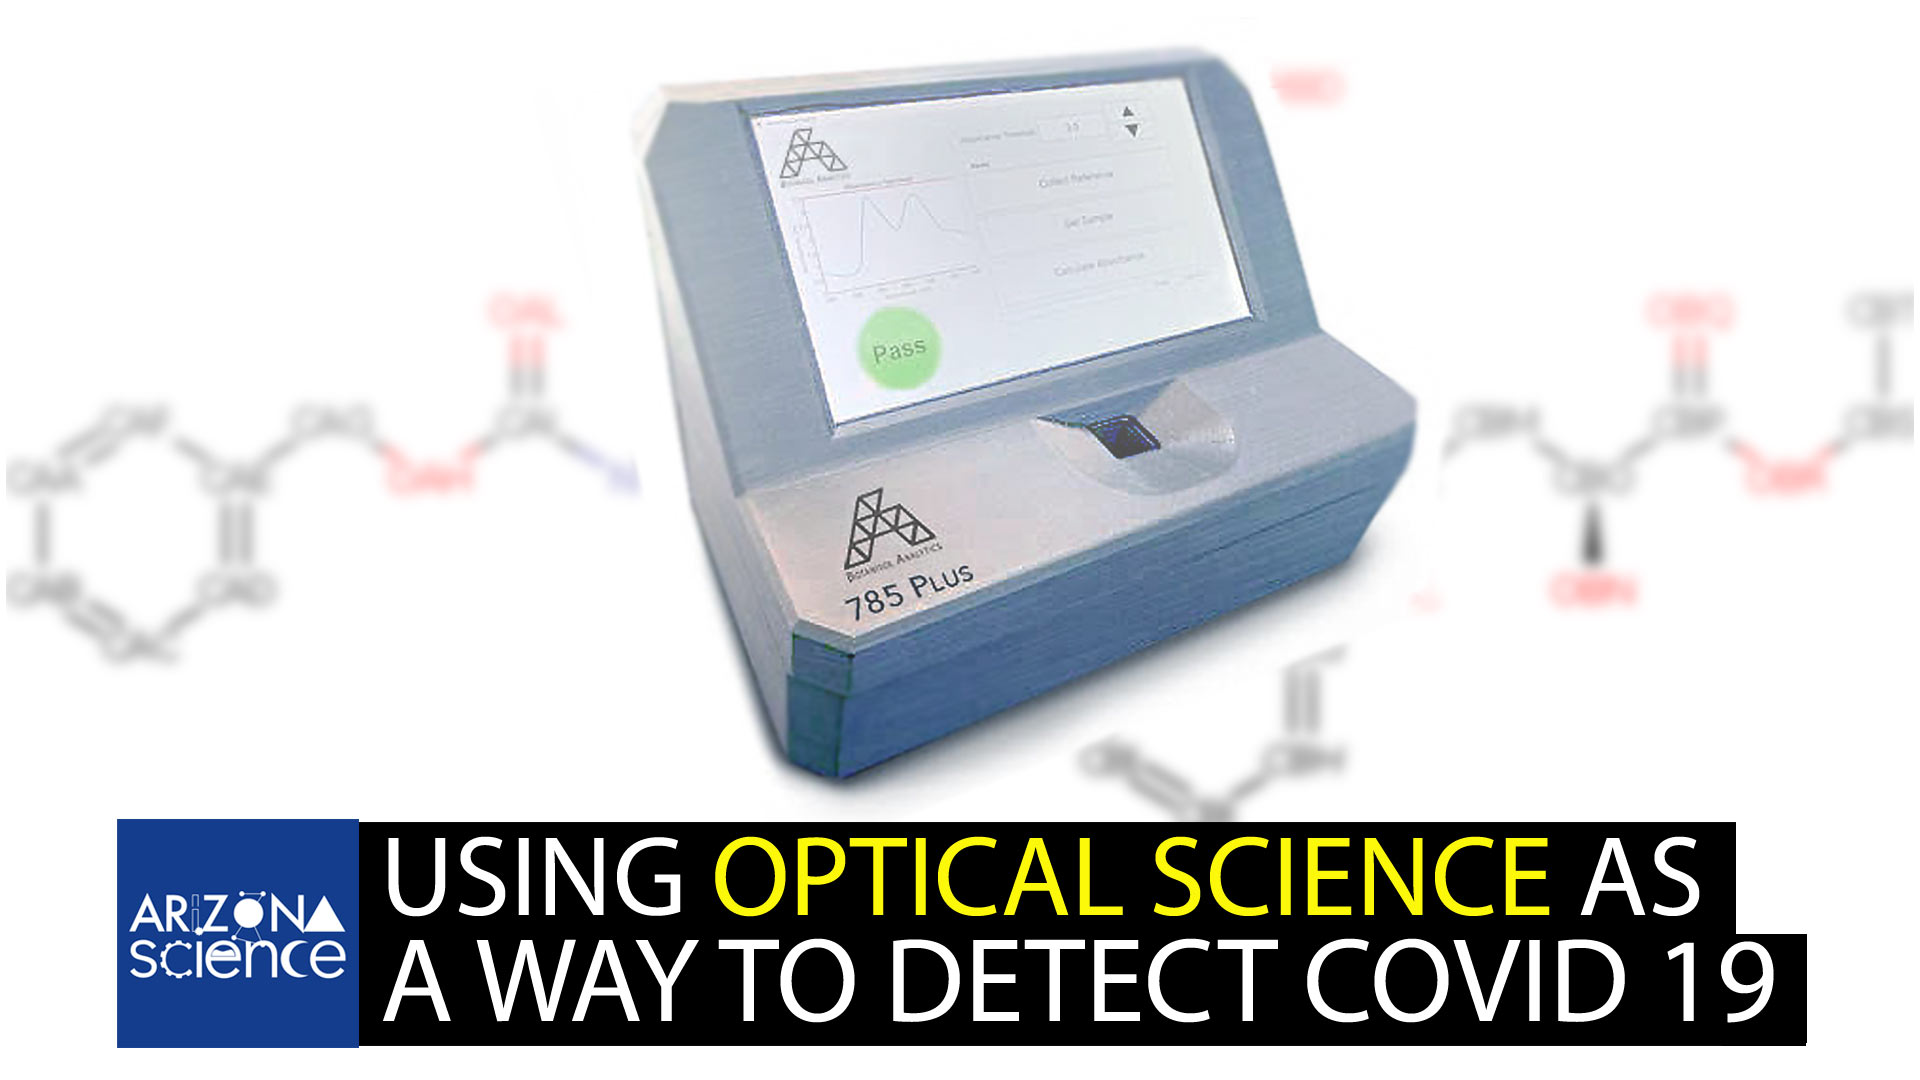  UA-developed device is designed to analyze coronavirus samples